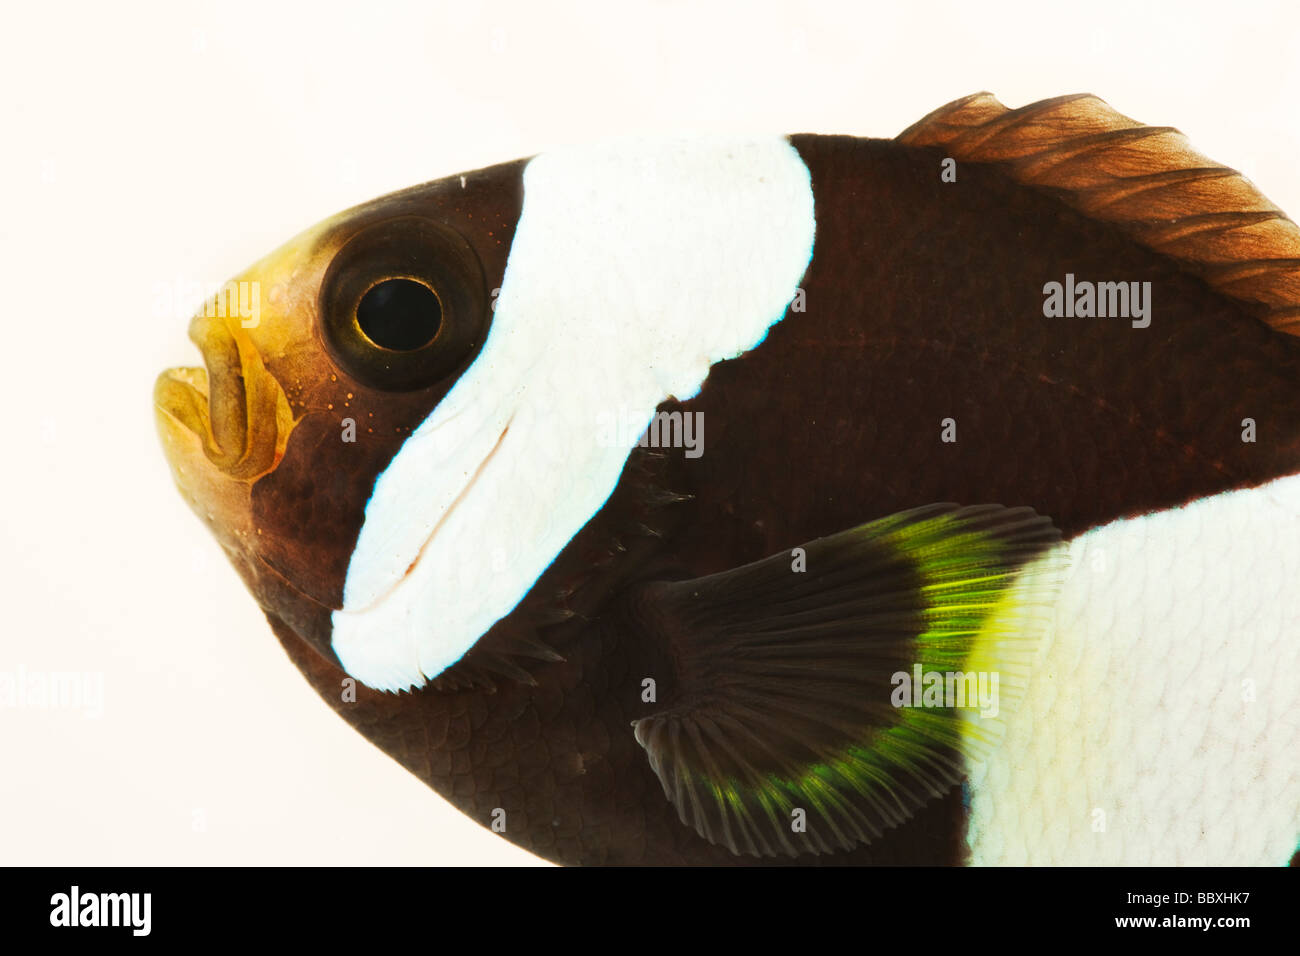 Black and white False Percula Clownfish Amphiprion ocellaris Tropical marine reef fish Stock Photo